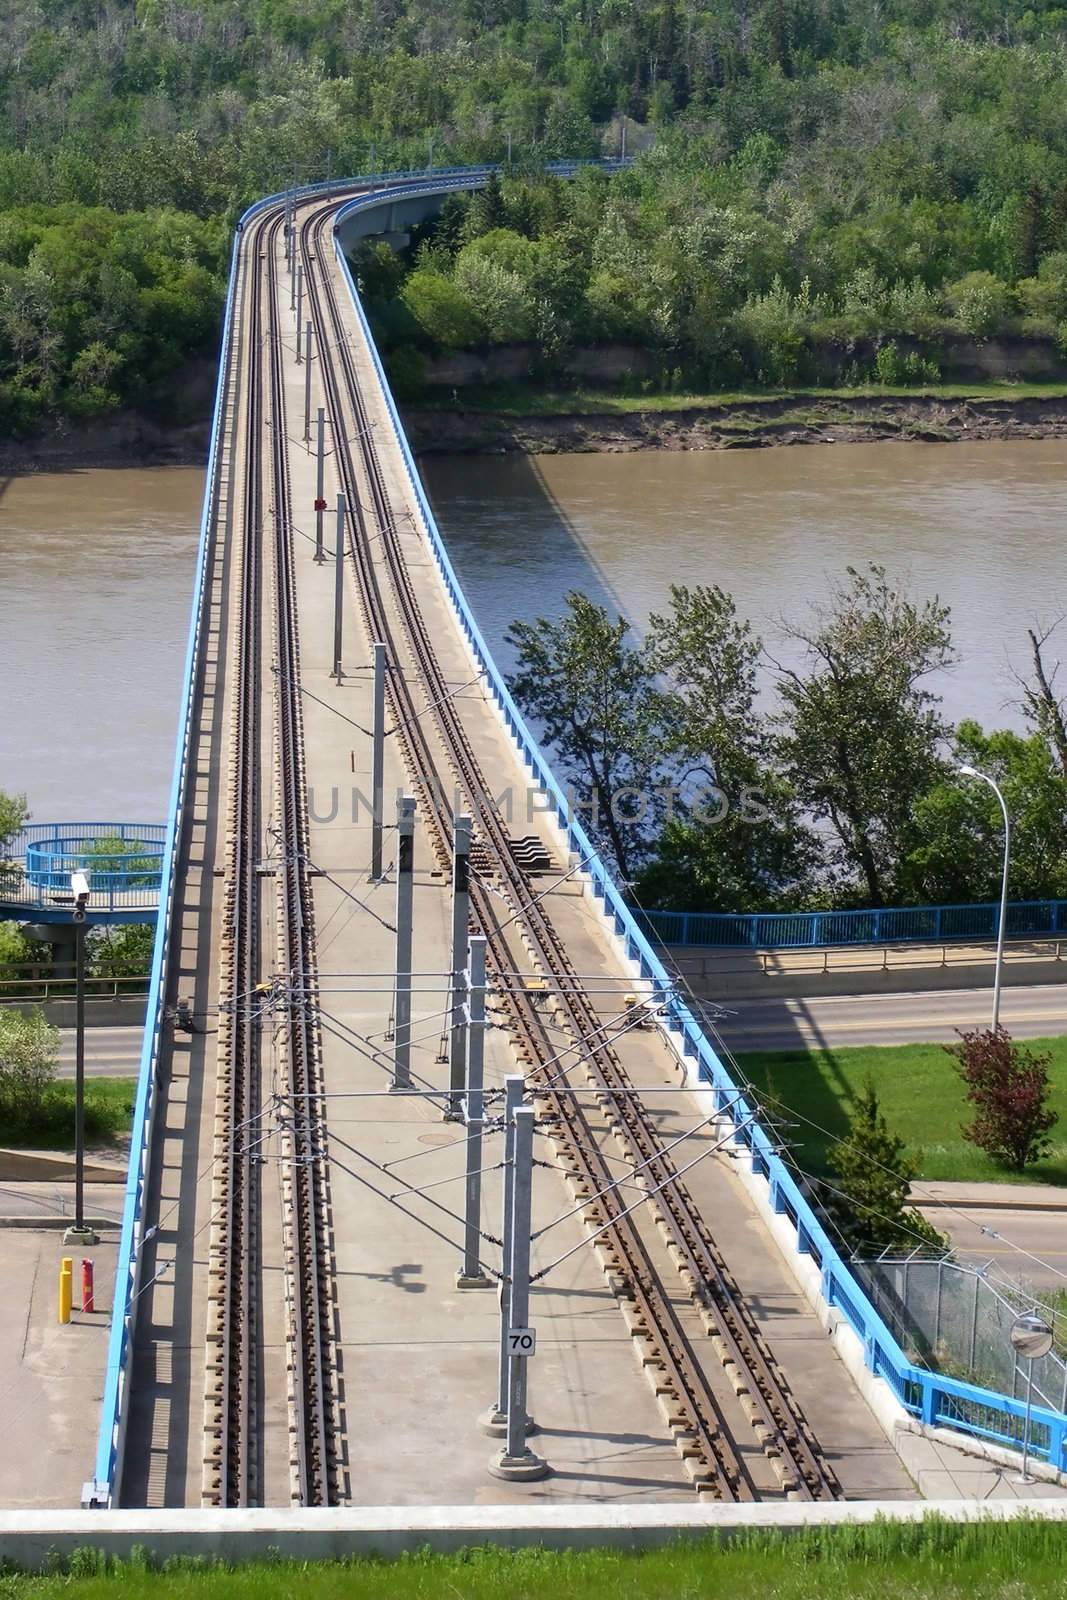 Light rail transit tracks and bridge over river.